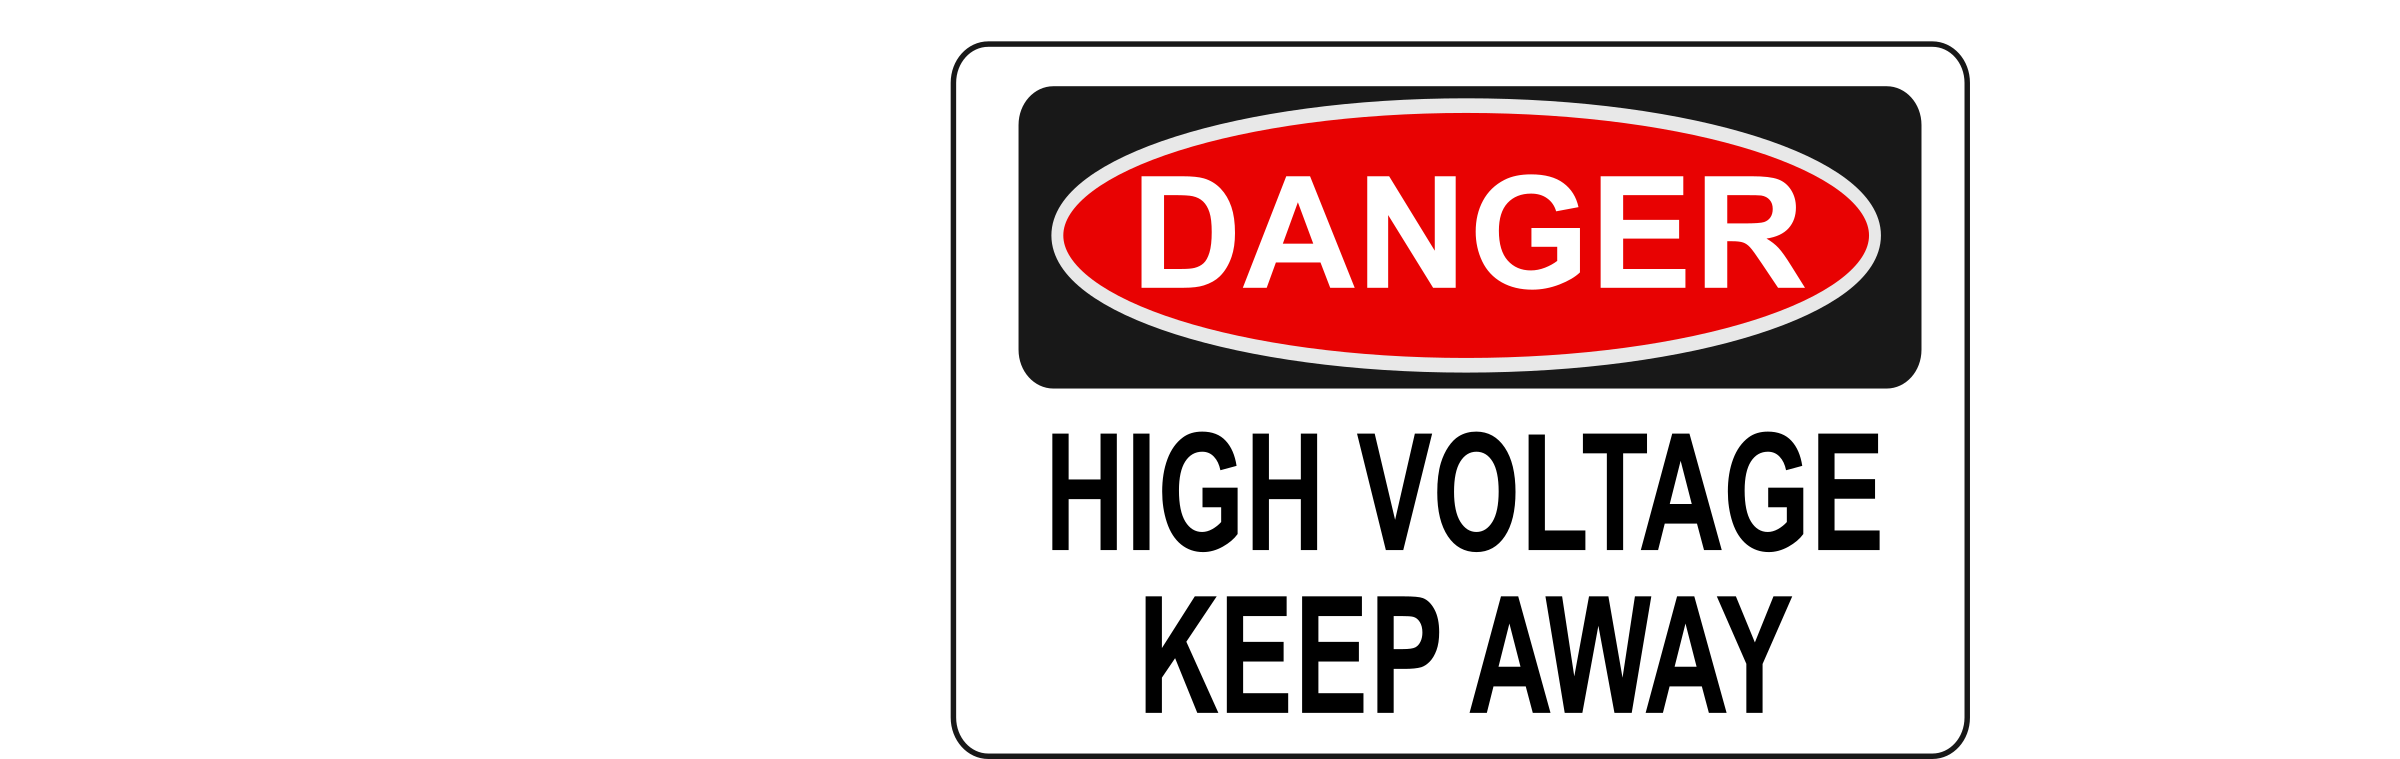 Danger   High Voltage Keep Away By Rfc1394